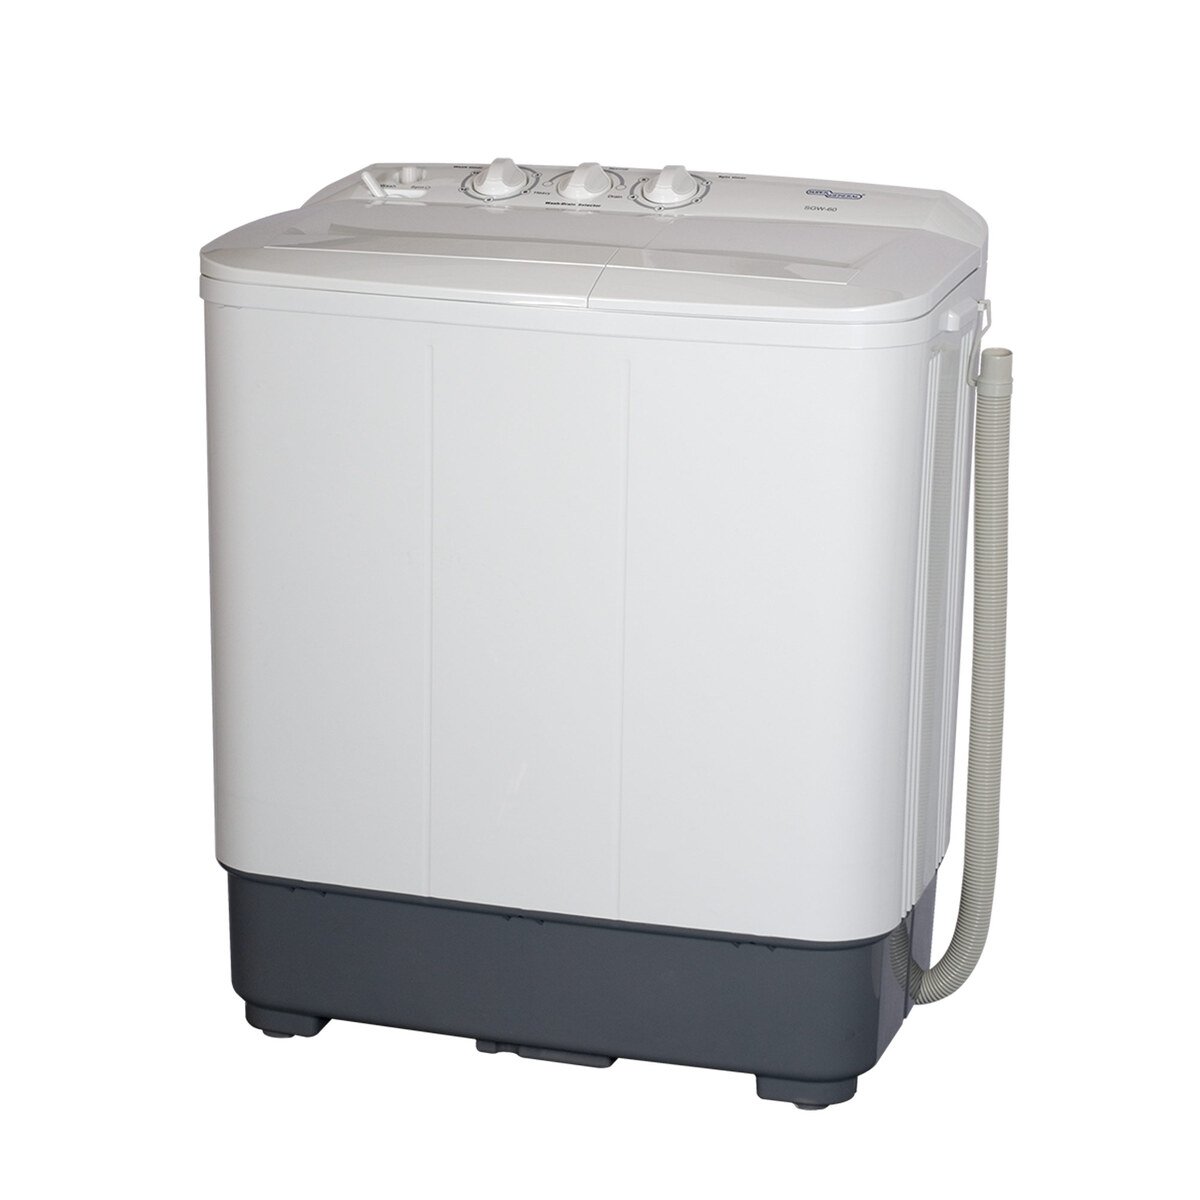 Super General Twin Tub Top Load Washing Machine, 5 kg, SGW50 